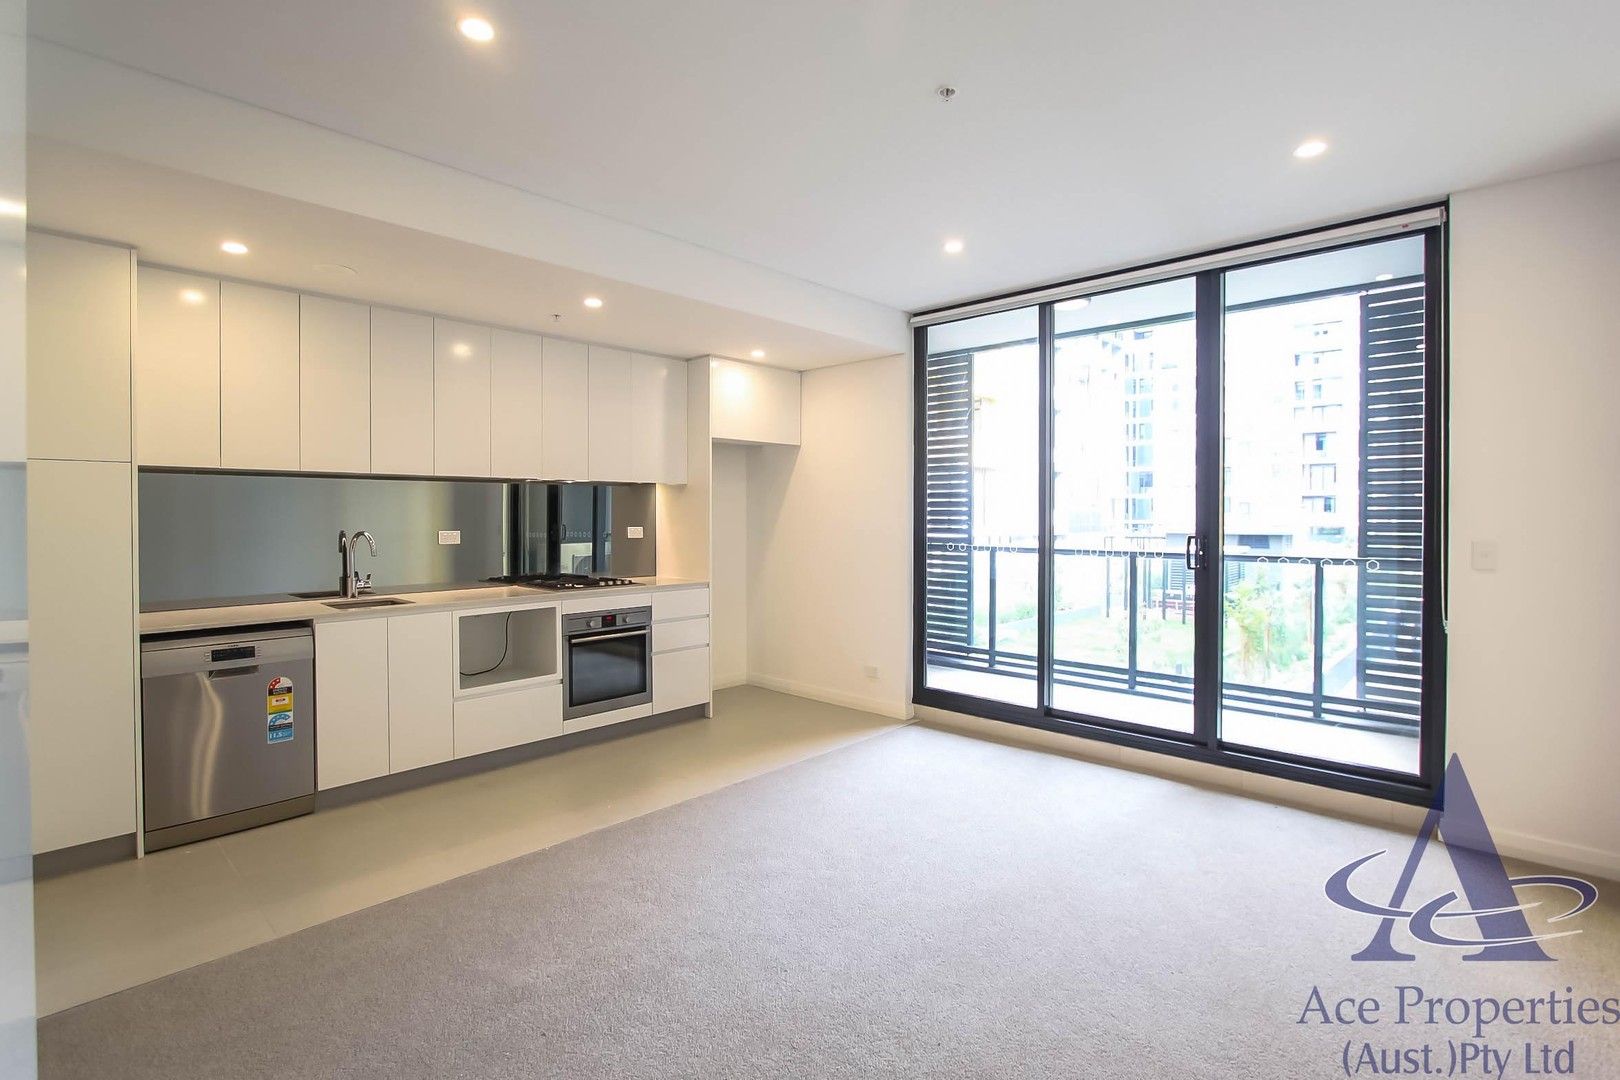 1 bedrooms Apartment / Unit / Flat in C4106/1 Hamilton Cres RYDE NSW, 2112